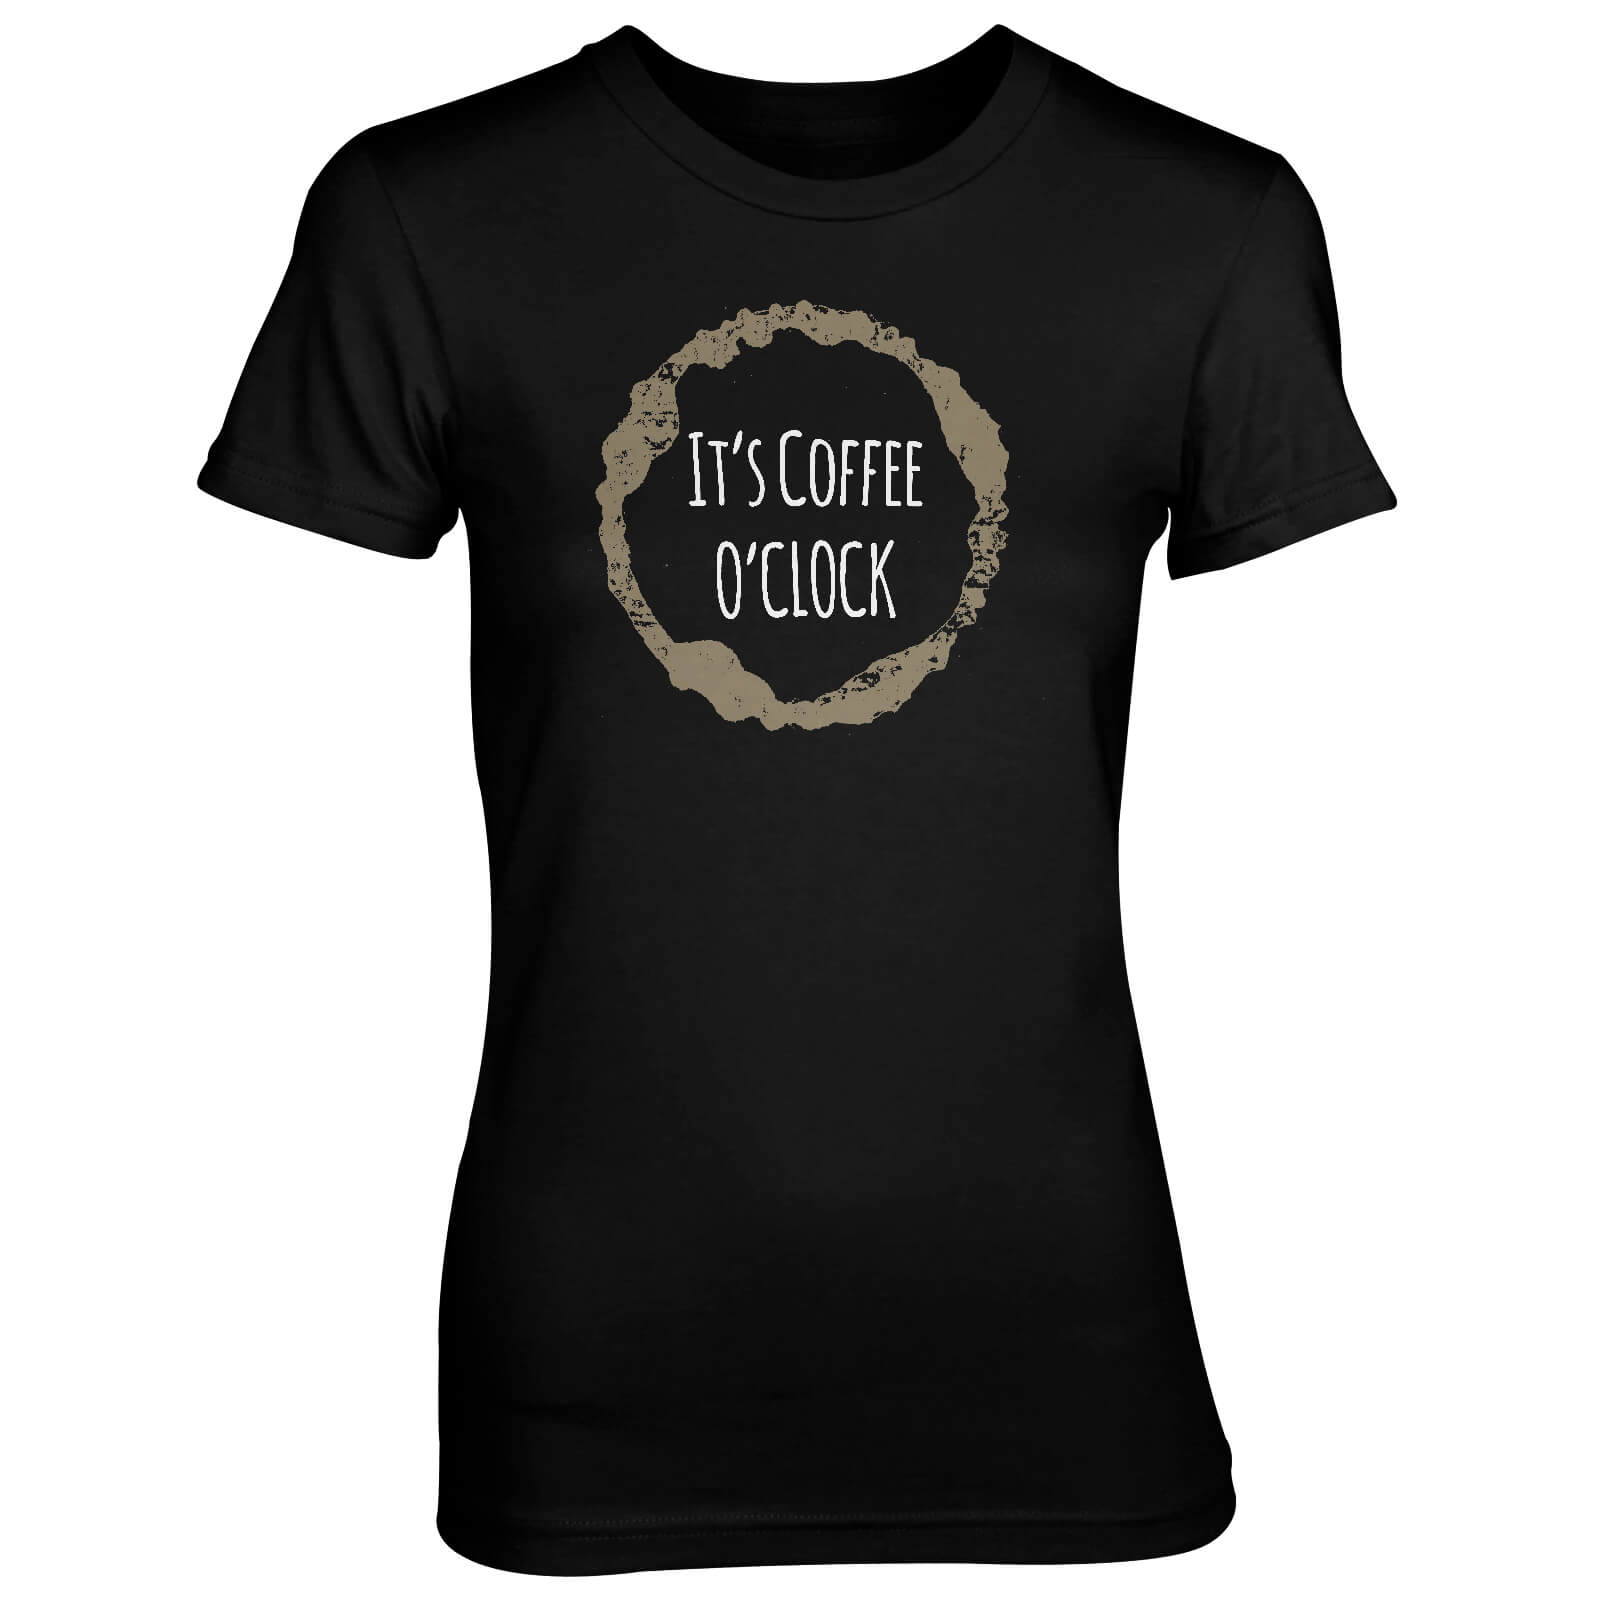 It's Coffee O'Clock Women's Black T-Shirt - S - Black